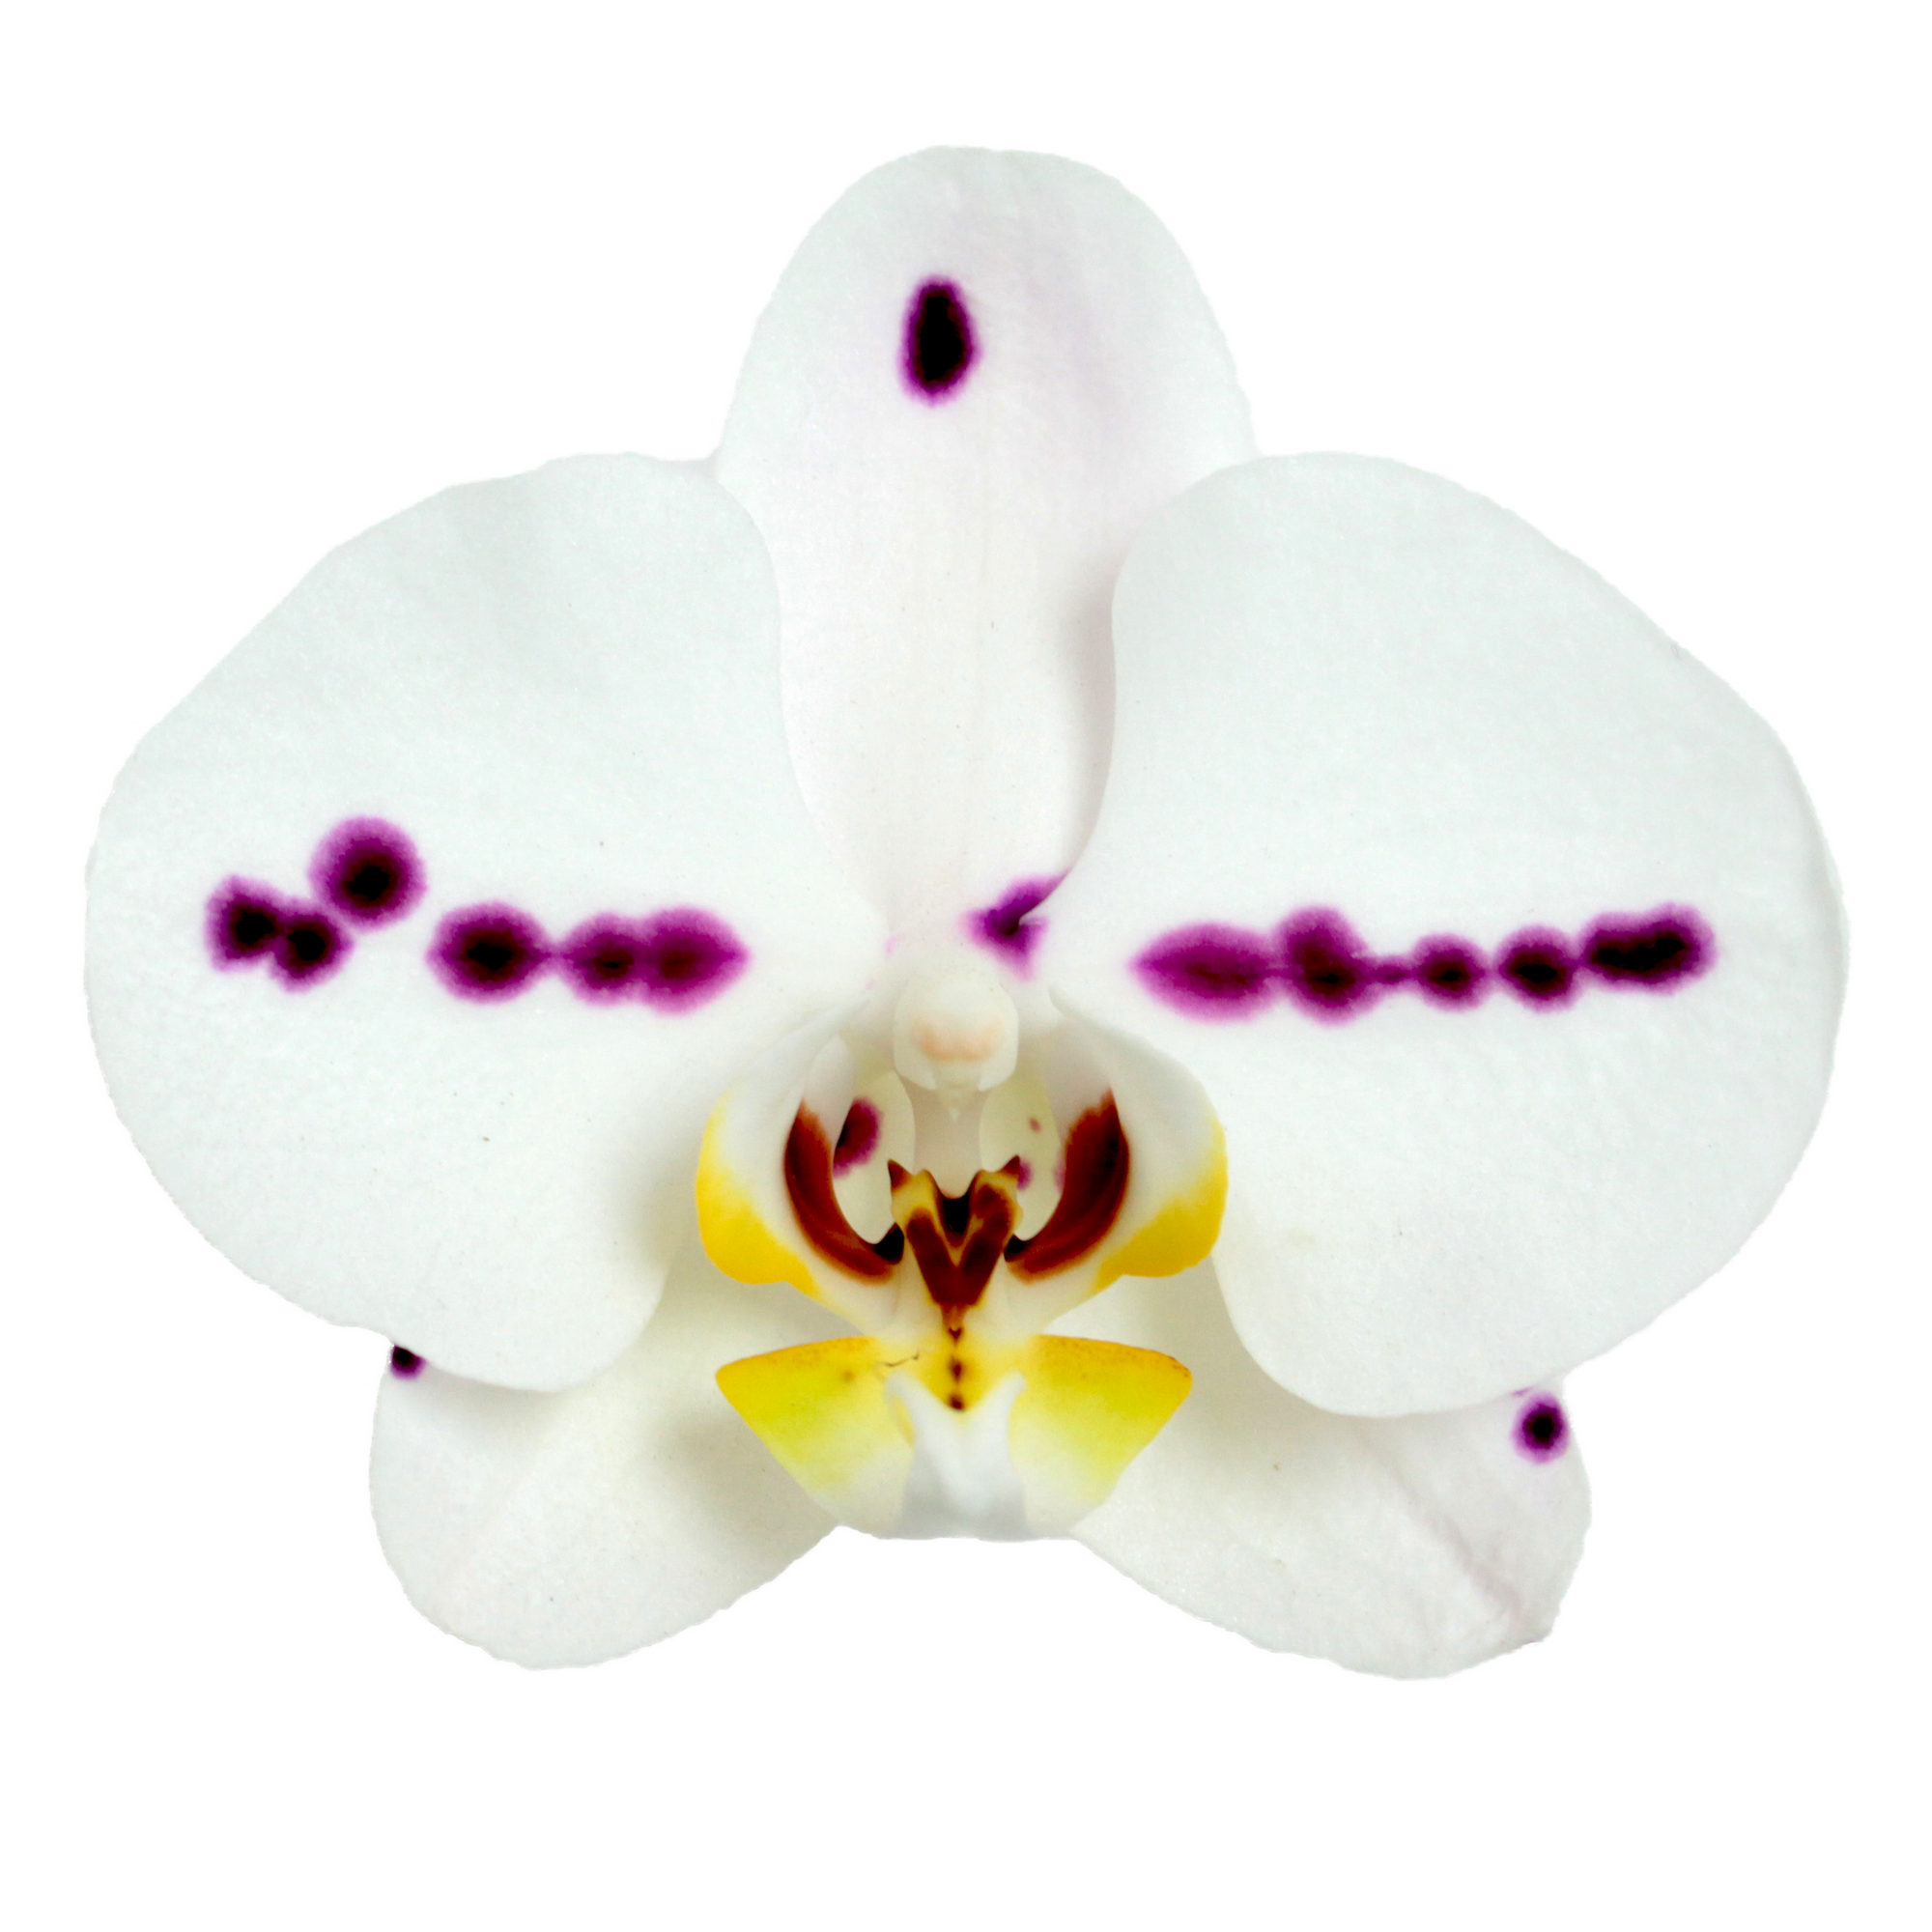 Schmetterlingsorchidee 2 Rispen weiß mit Kuhflecken 12 cm Topf + product picture